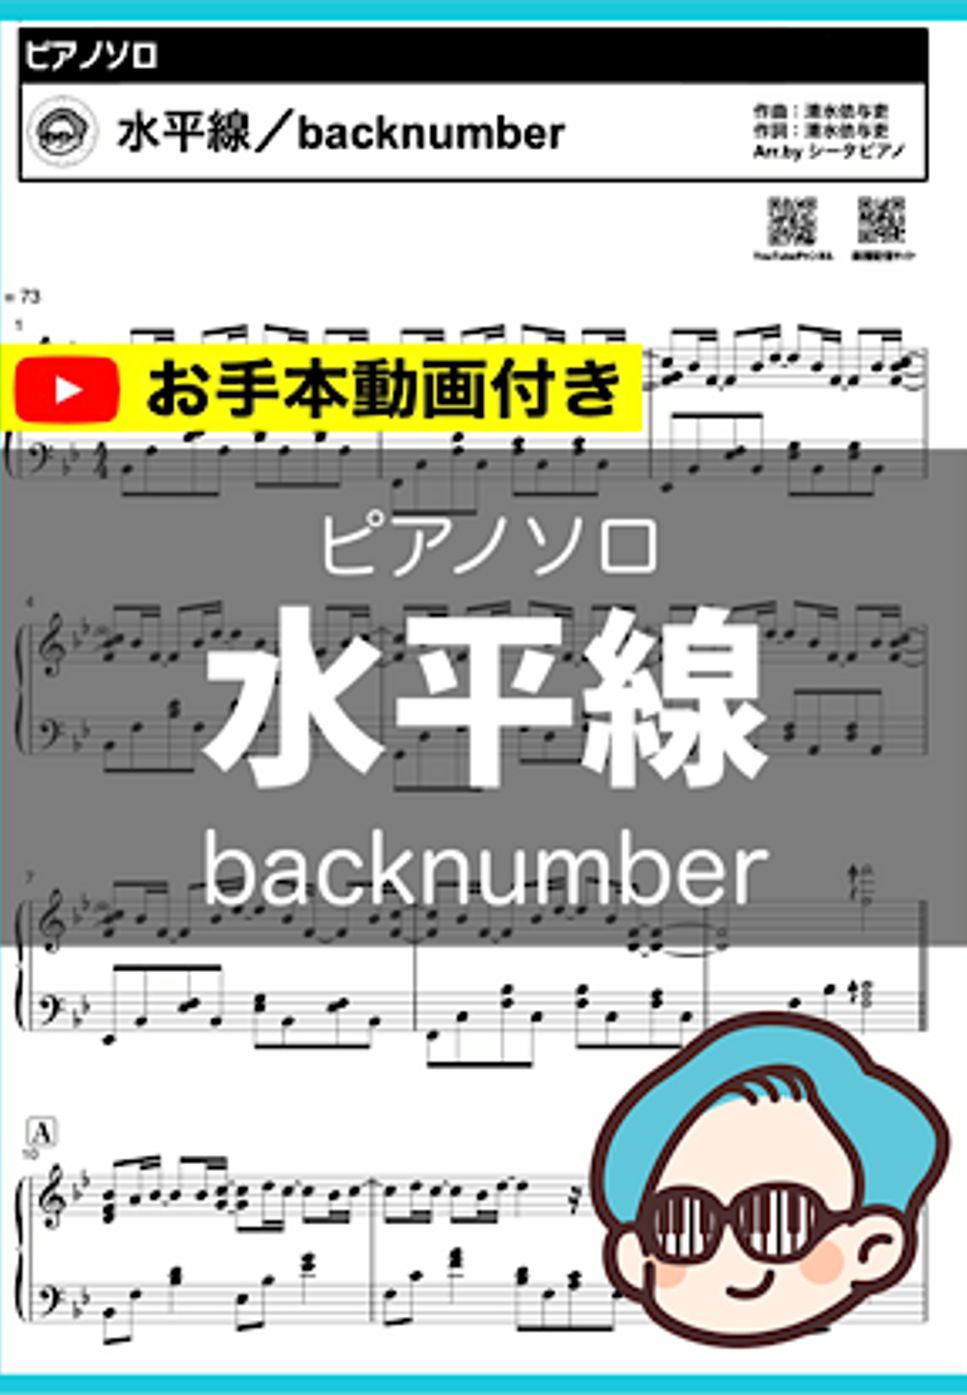 backnumber - 水平線 by シータピアノ